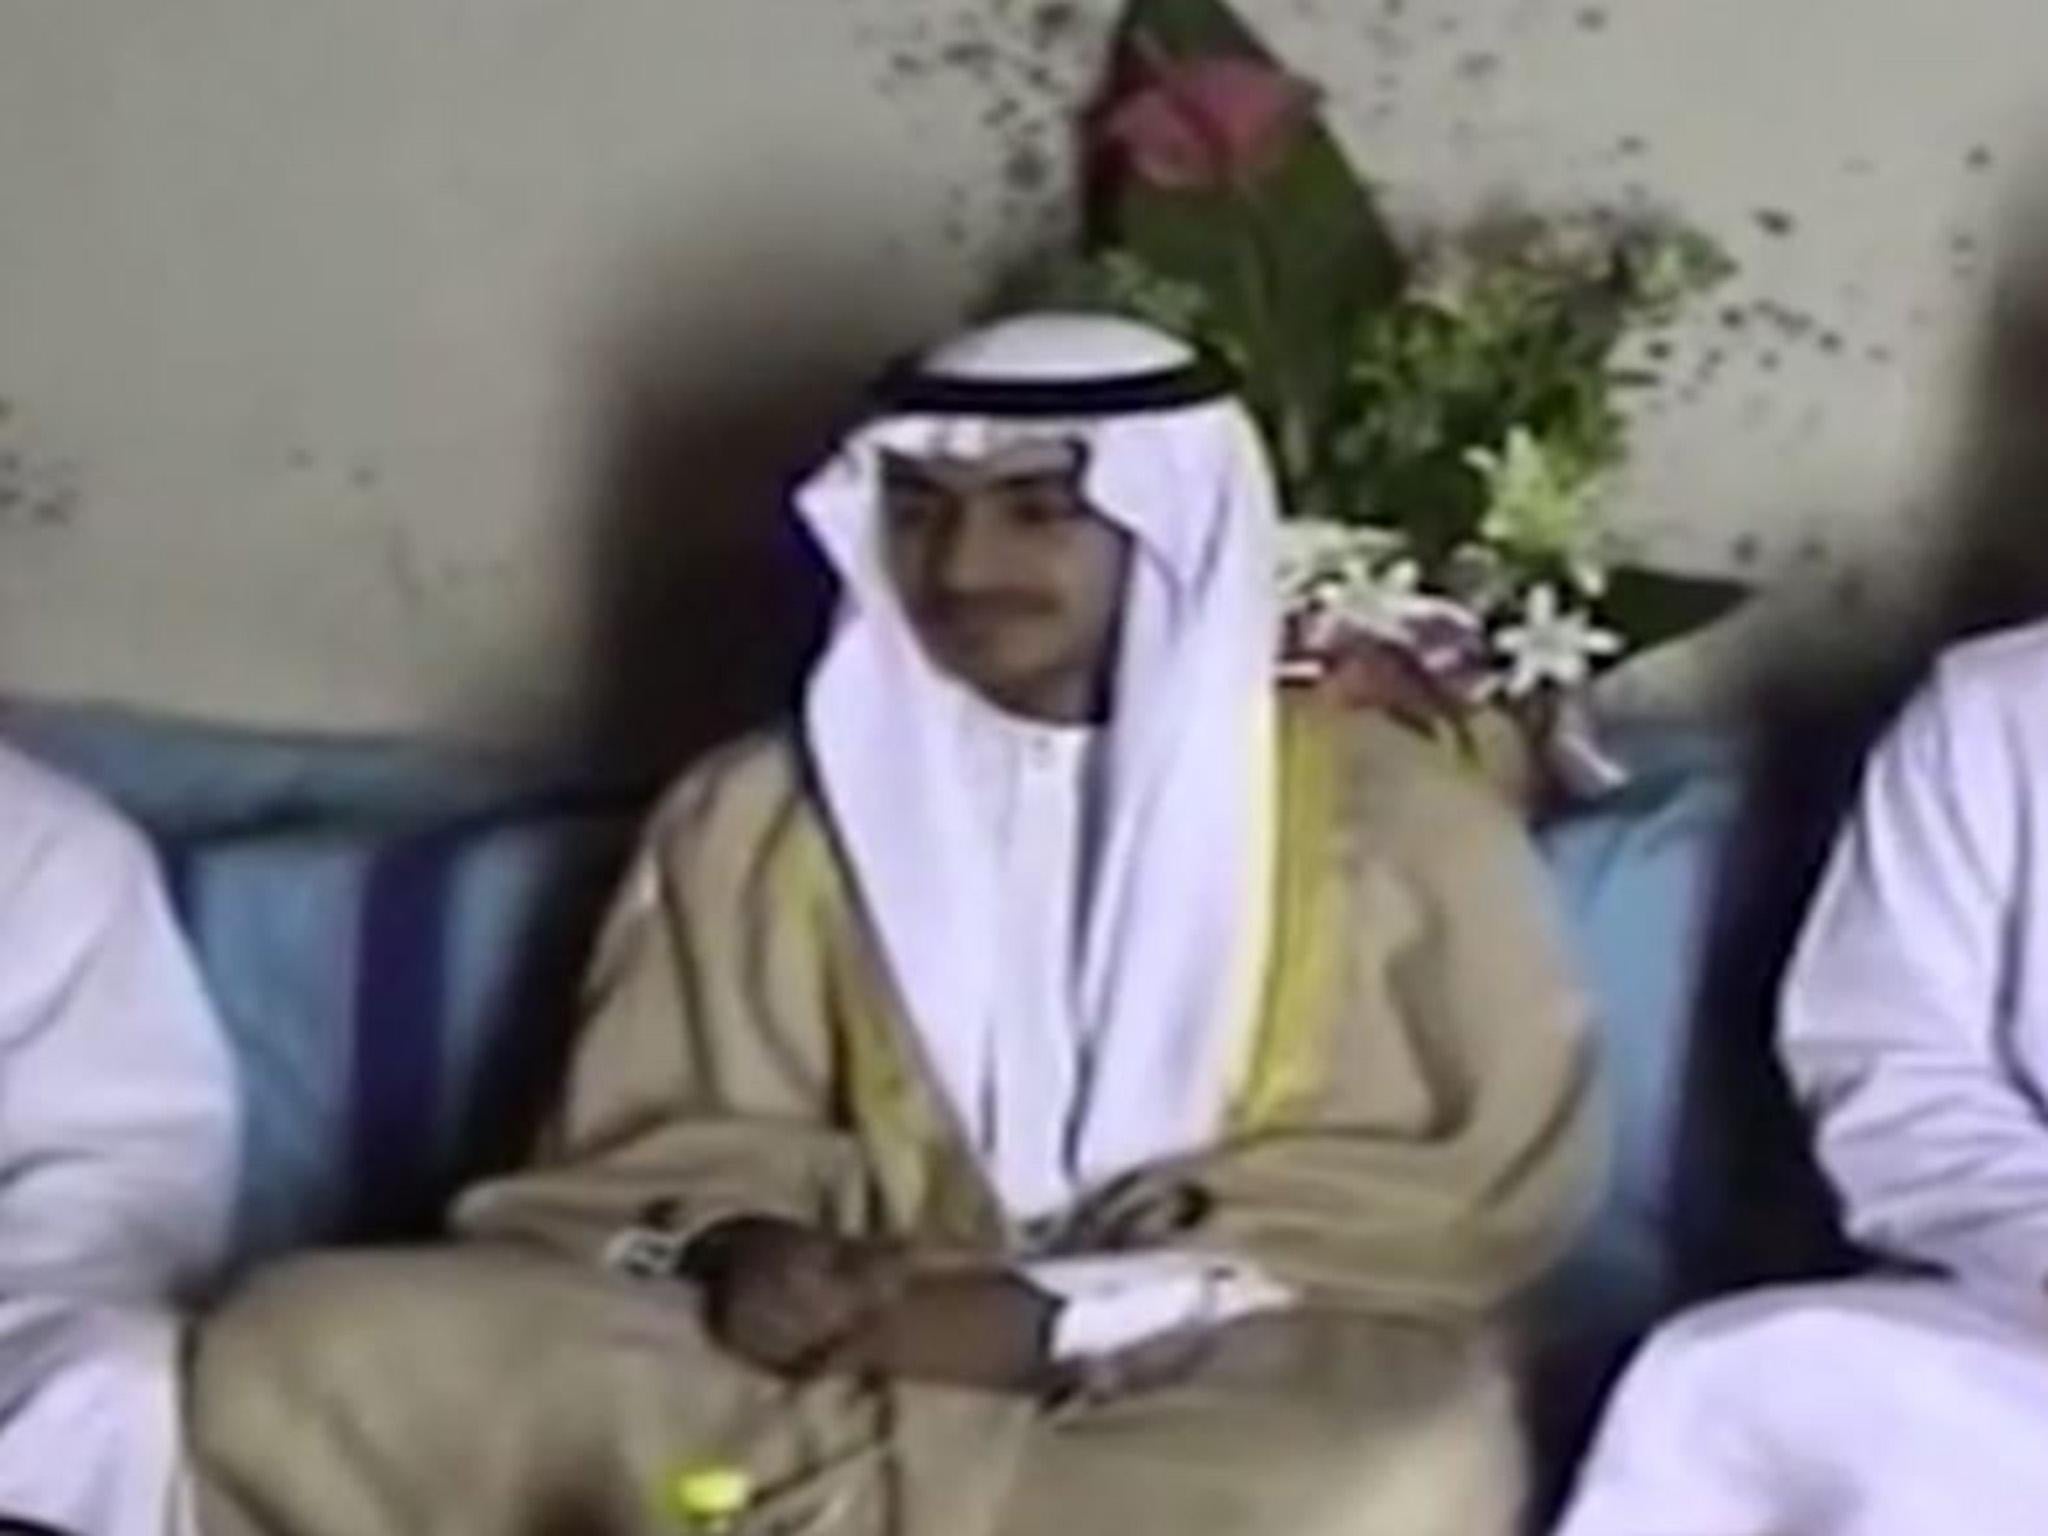 Hamza bin Laden pictured on his wedding day around 10 years ago